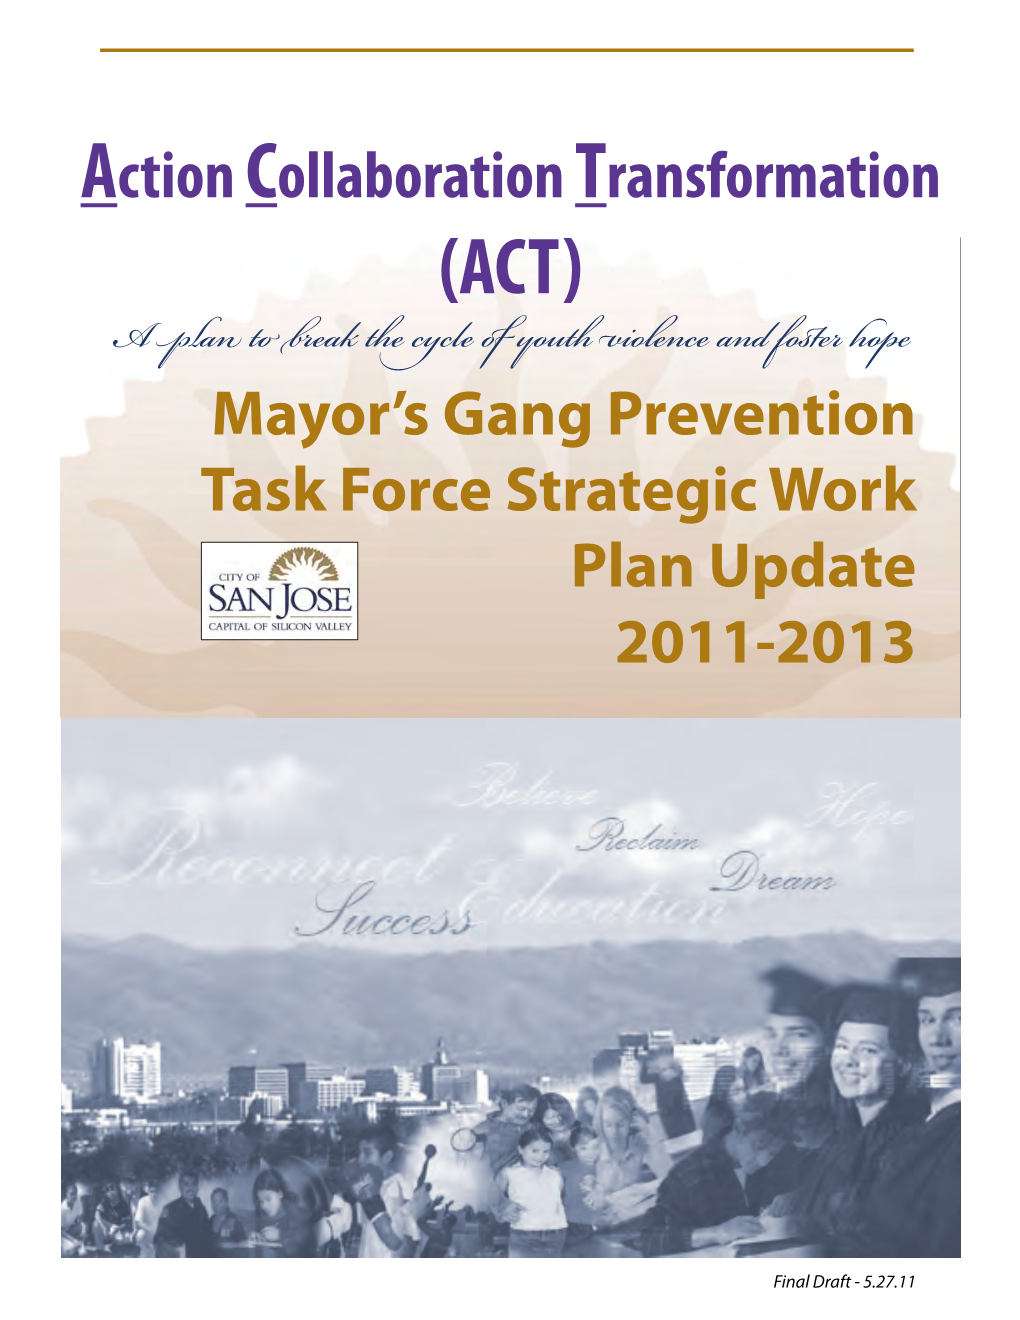 Mayor's Gang Prevention Task Force Strategic Work Plan Update 2011